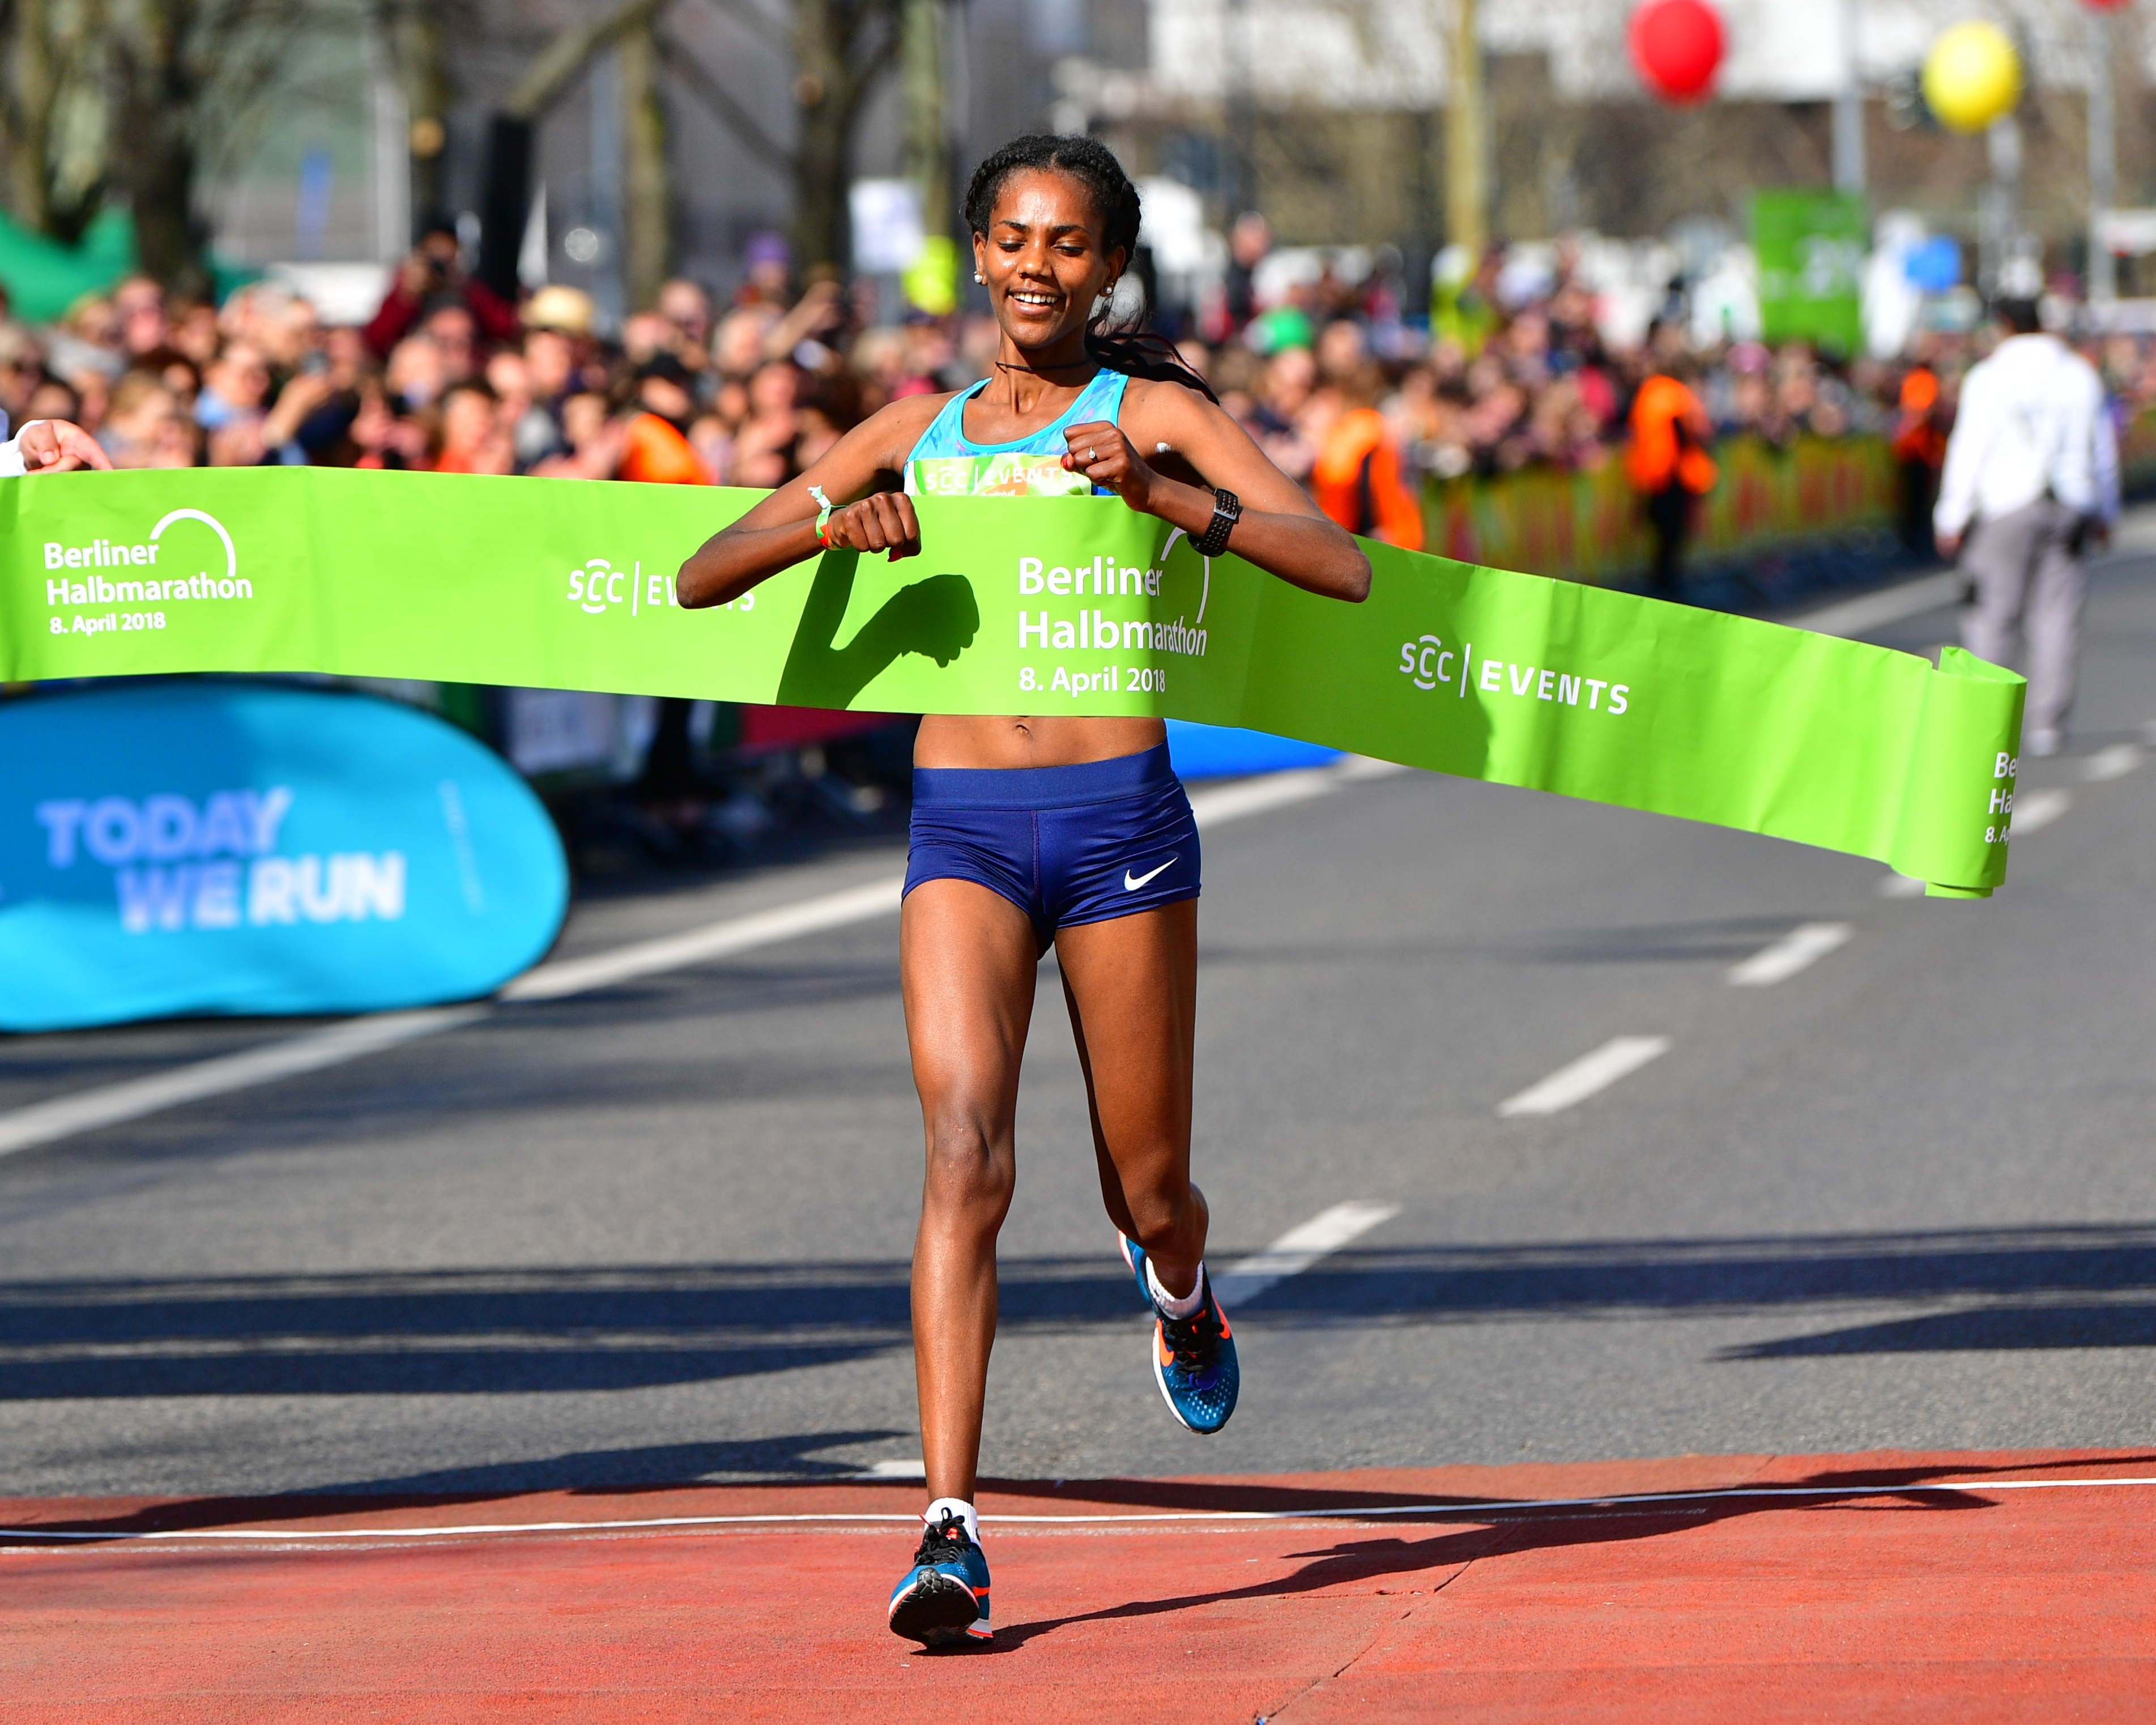 Melat Kejeta is going run her marathon debut in Berlin